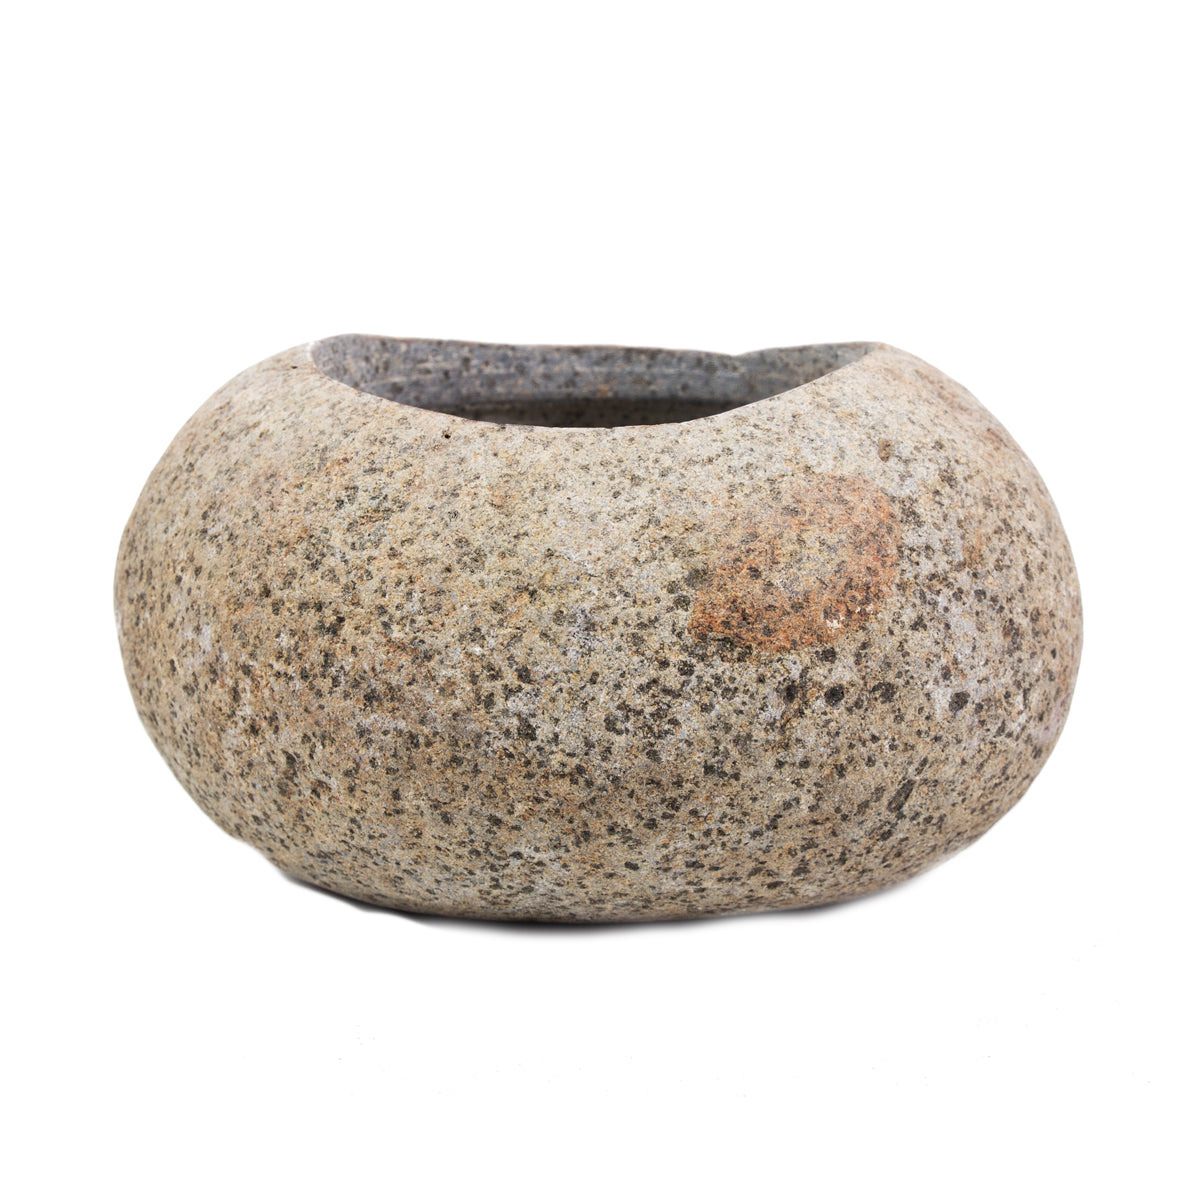 Indo Stone Planter Pot M 64